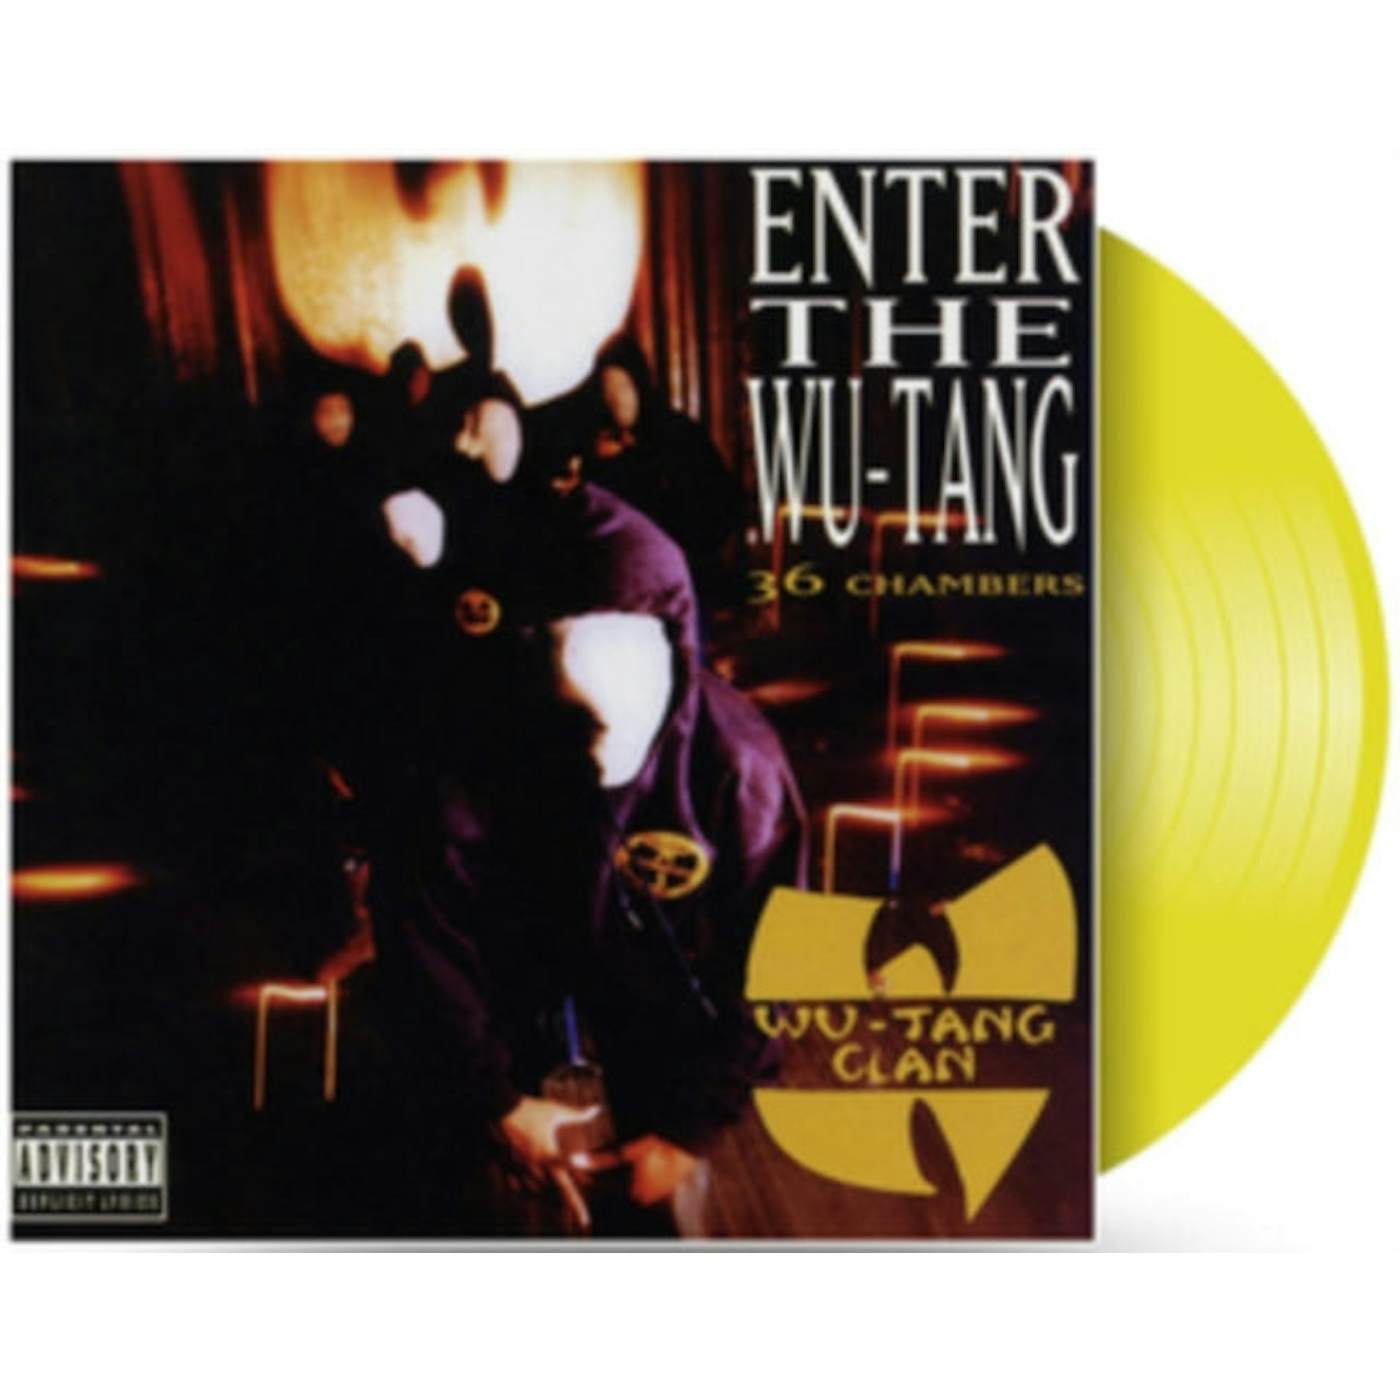 Wu-Tang Clan LP - Enter The Wu-Tang Clan 36 Chambers (Coloured Vinyl)